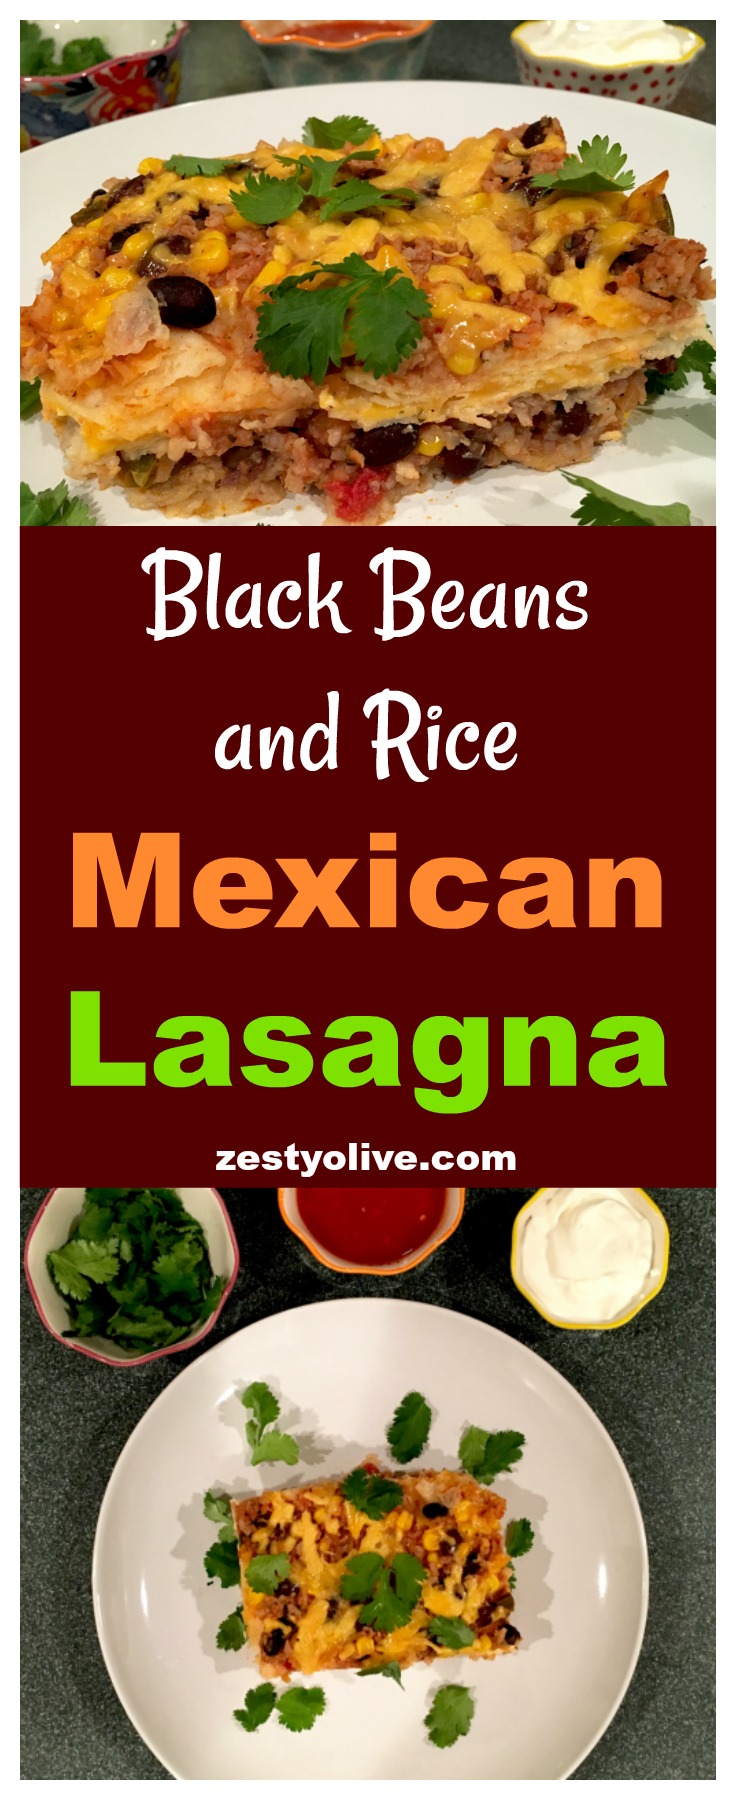 Black Beans and Rice Mexican Lasagna